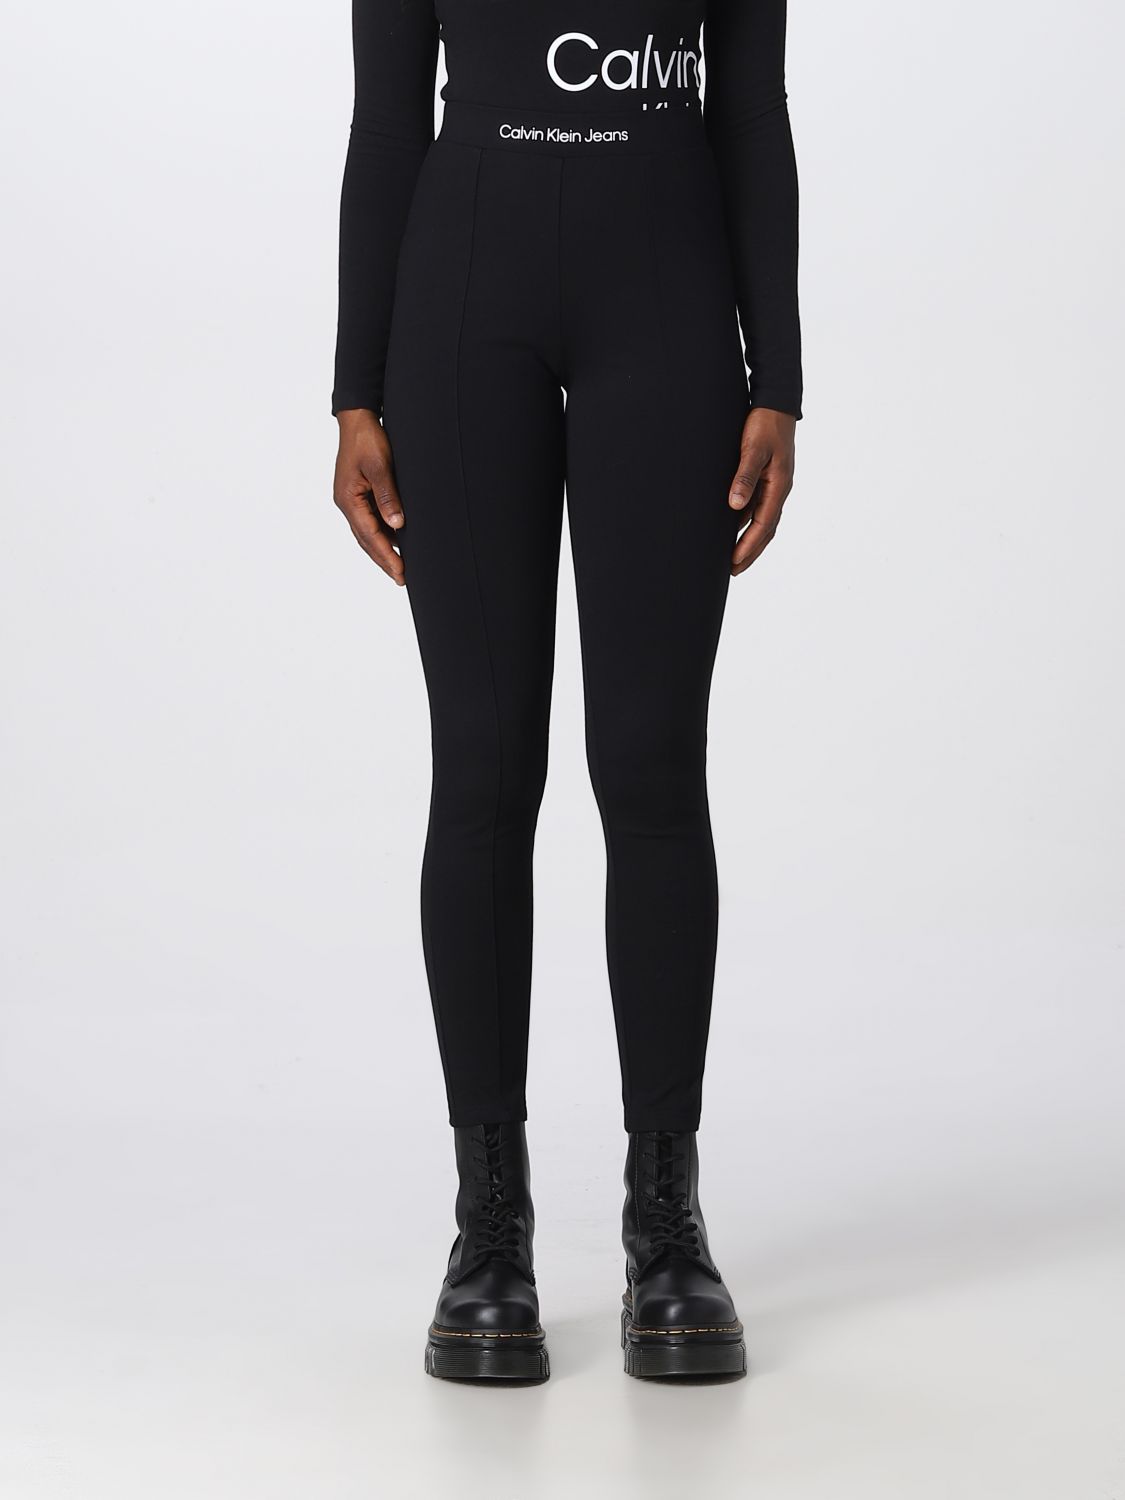 CALVIN KLEIN JEANS: women's pants - Black | Calvin Klein Jeans pants  J20J218976 online on 